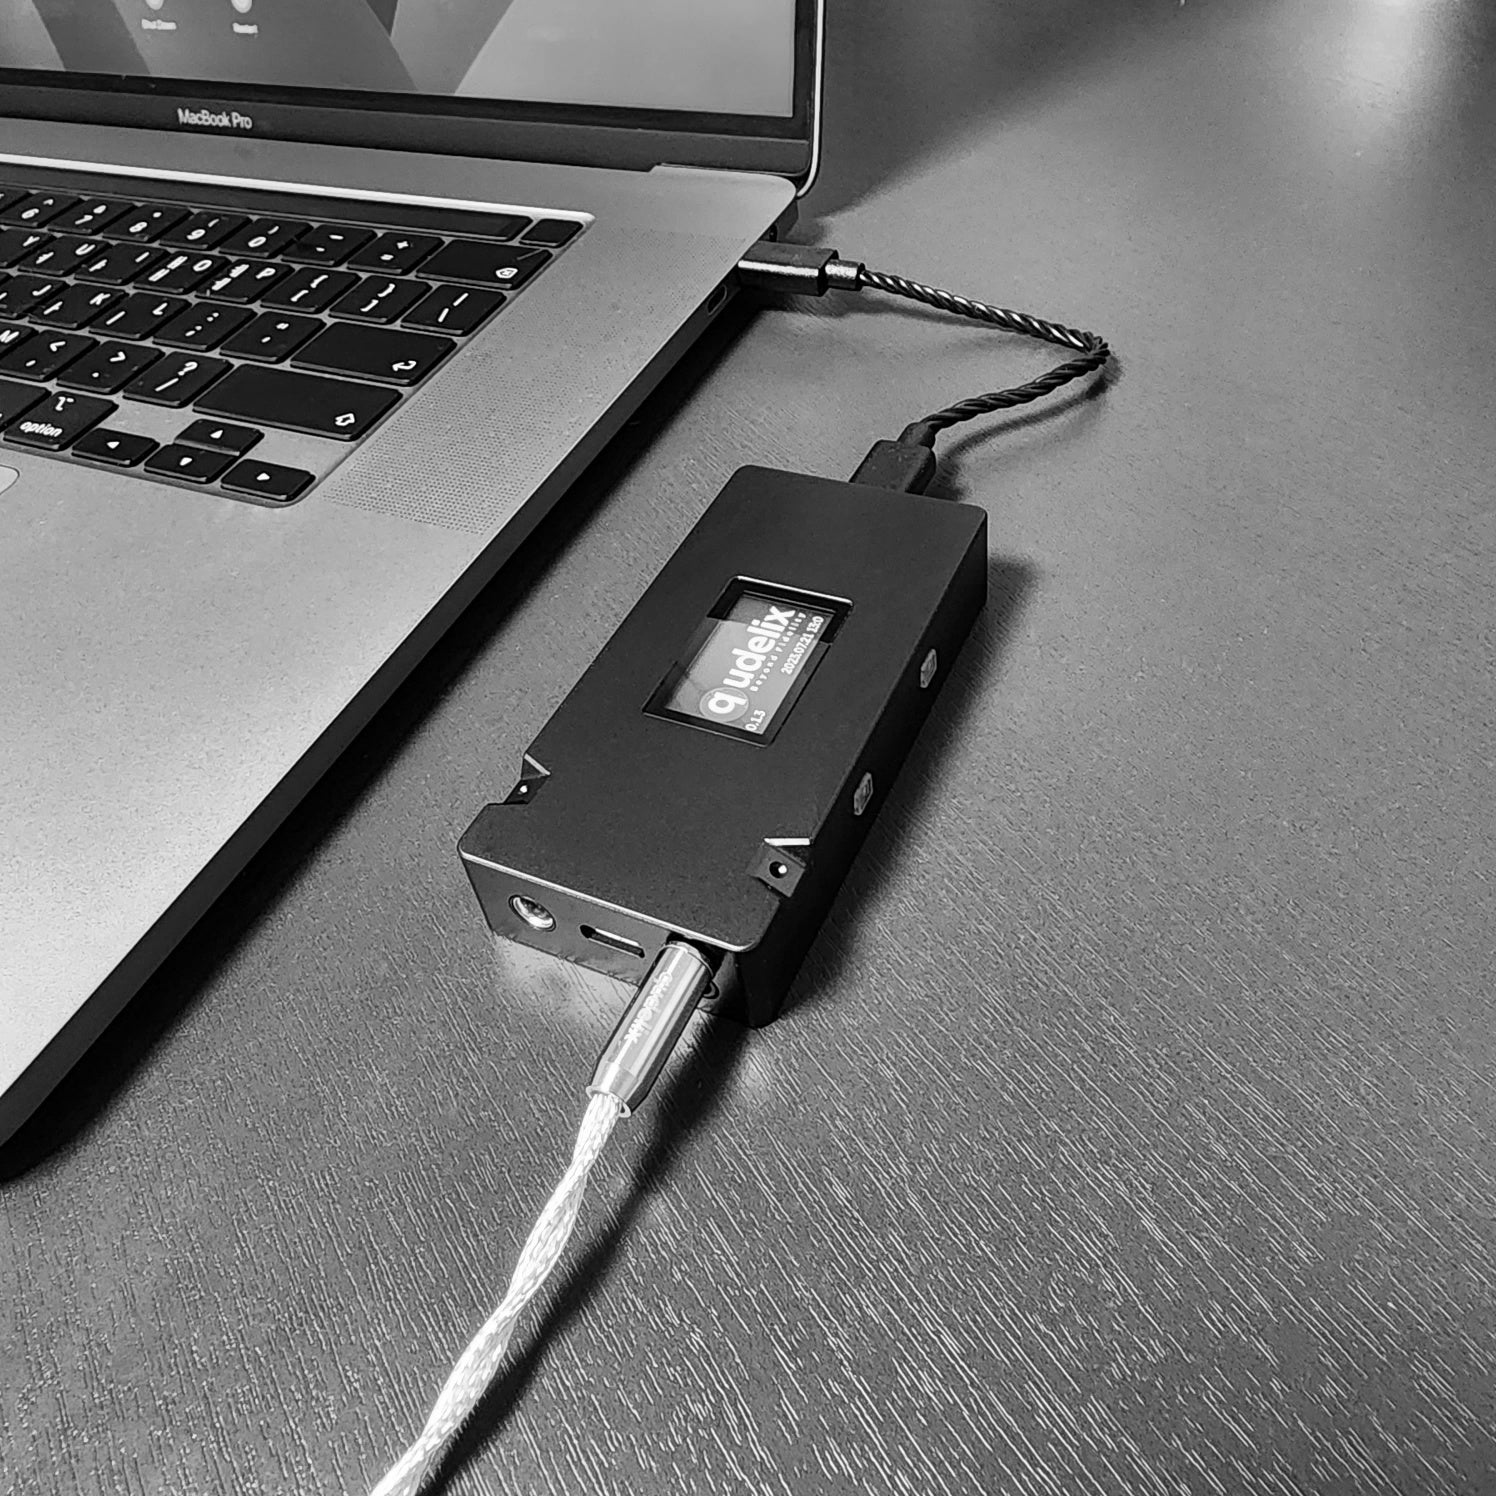 Qudelix-T71 USB DAC